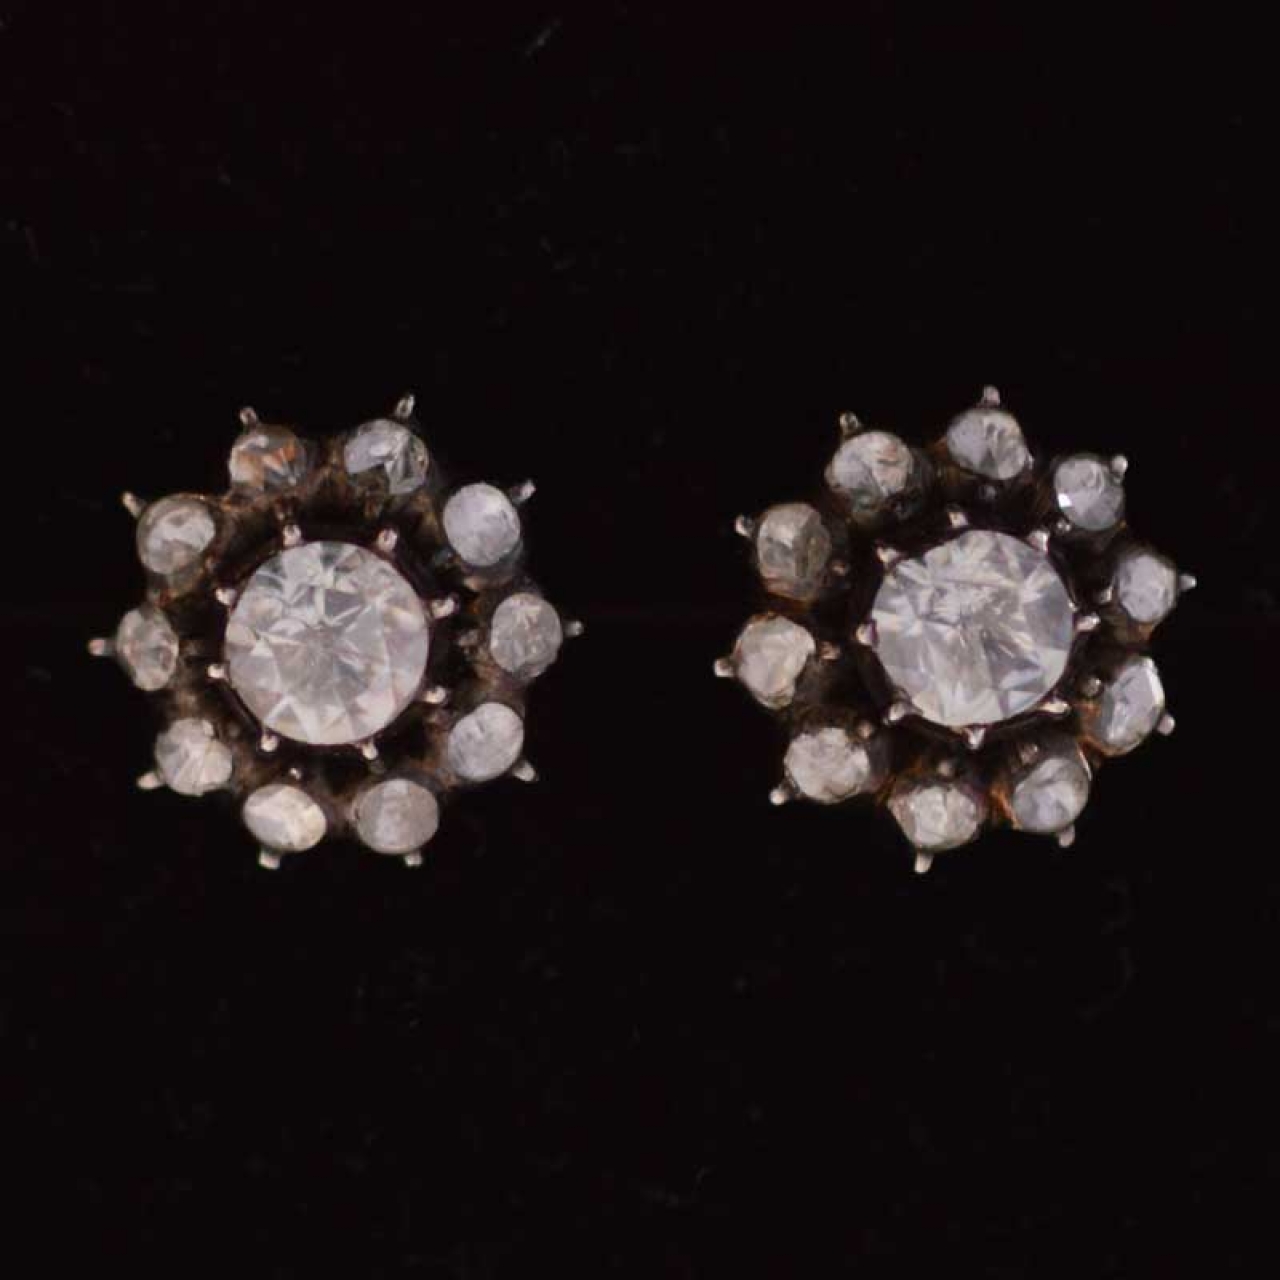 Ca 1900  Rosecut Diamonds Earrings incl Gemstones certificate   Antique Jewellery Berlin  Engagement Rings  Wedding Bands